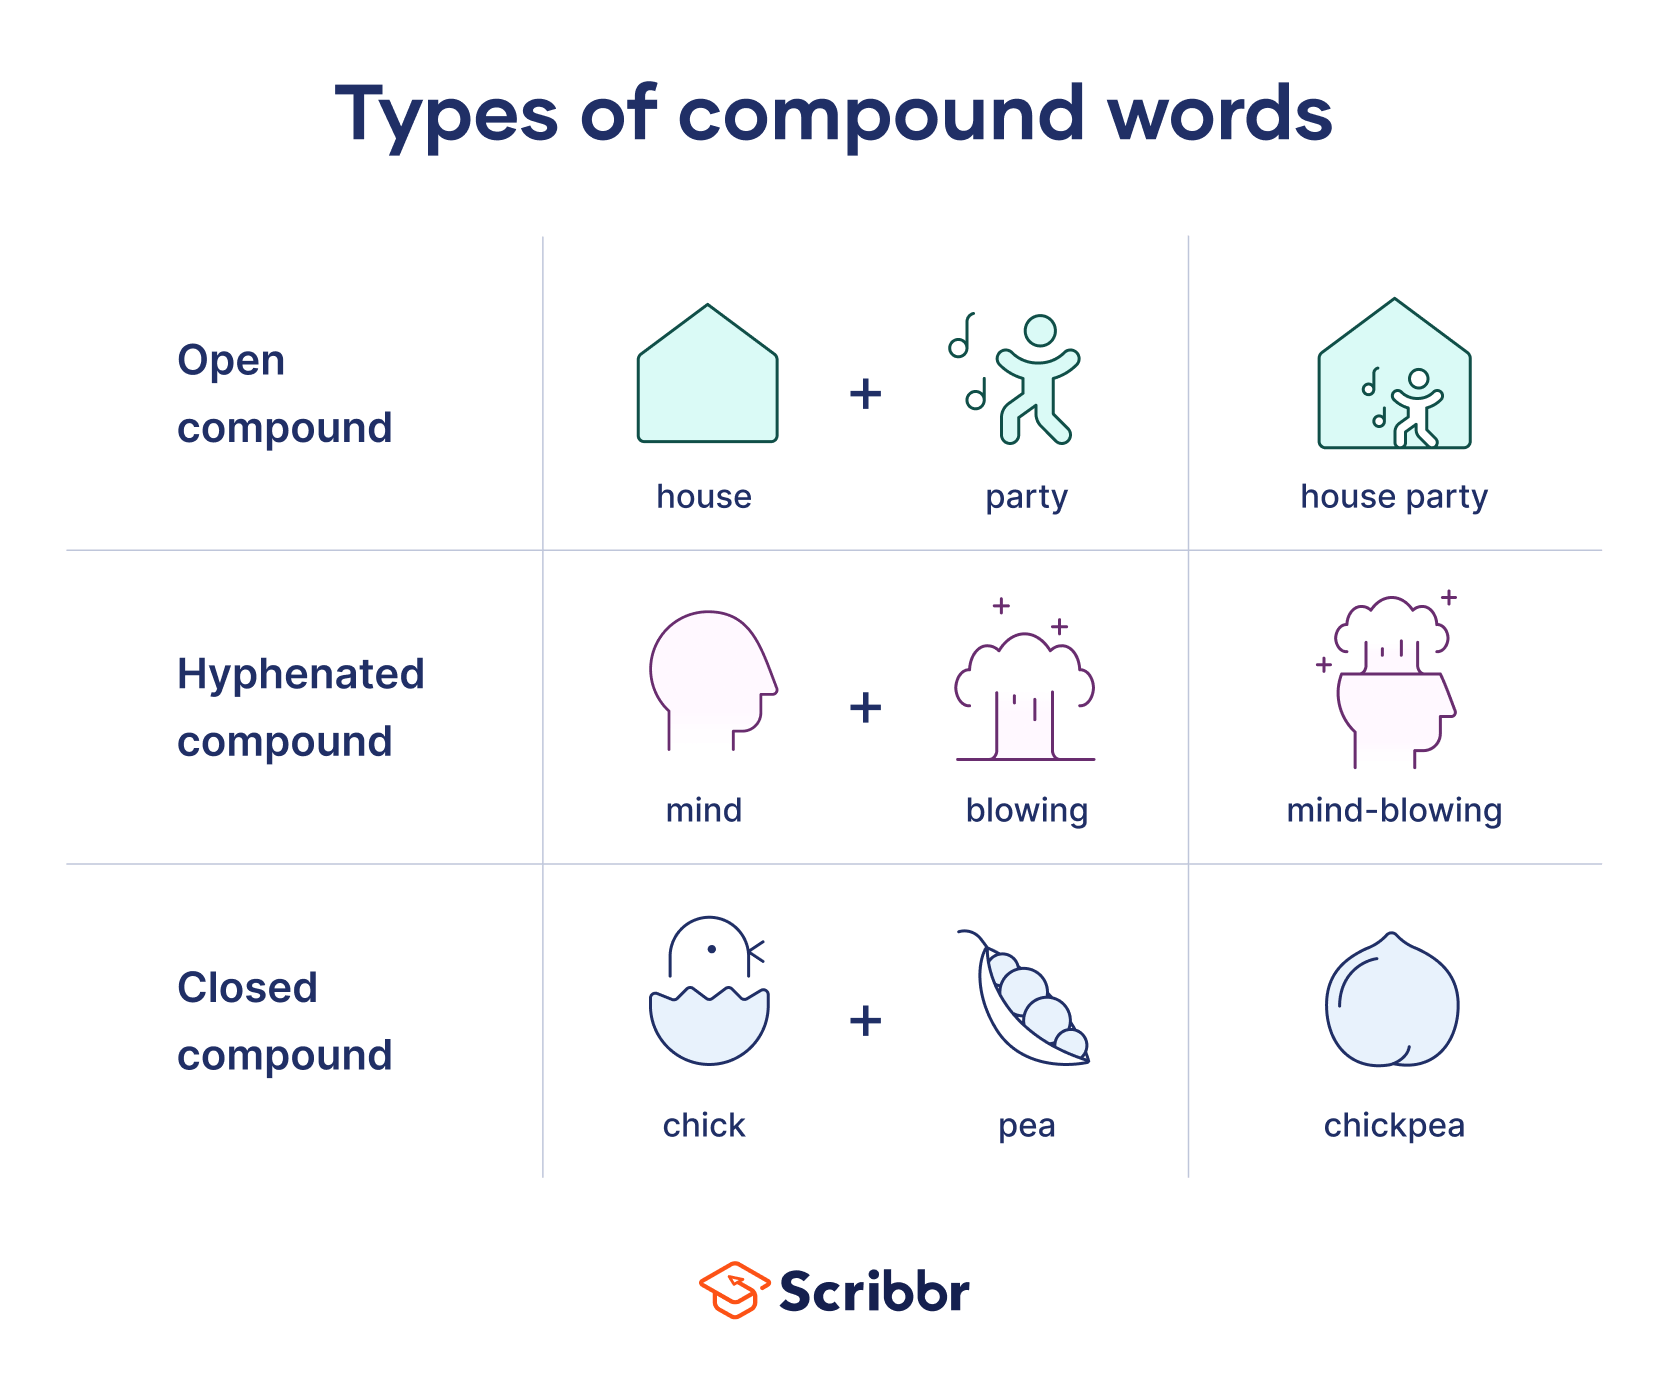 Compound Words | Types, List & Definition